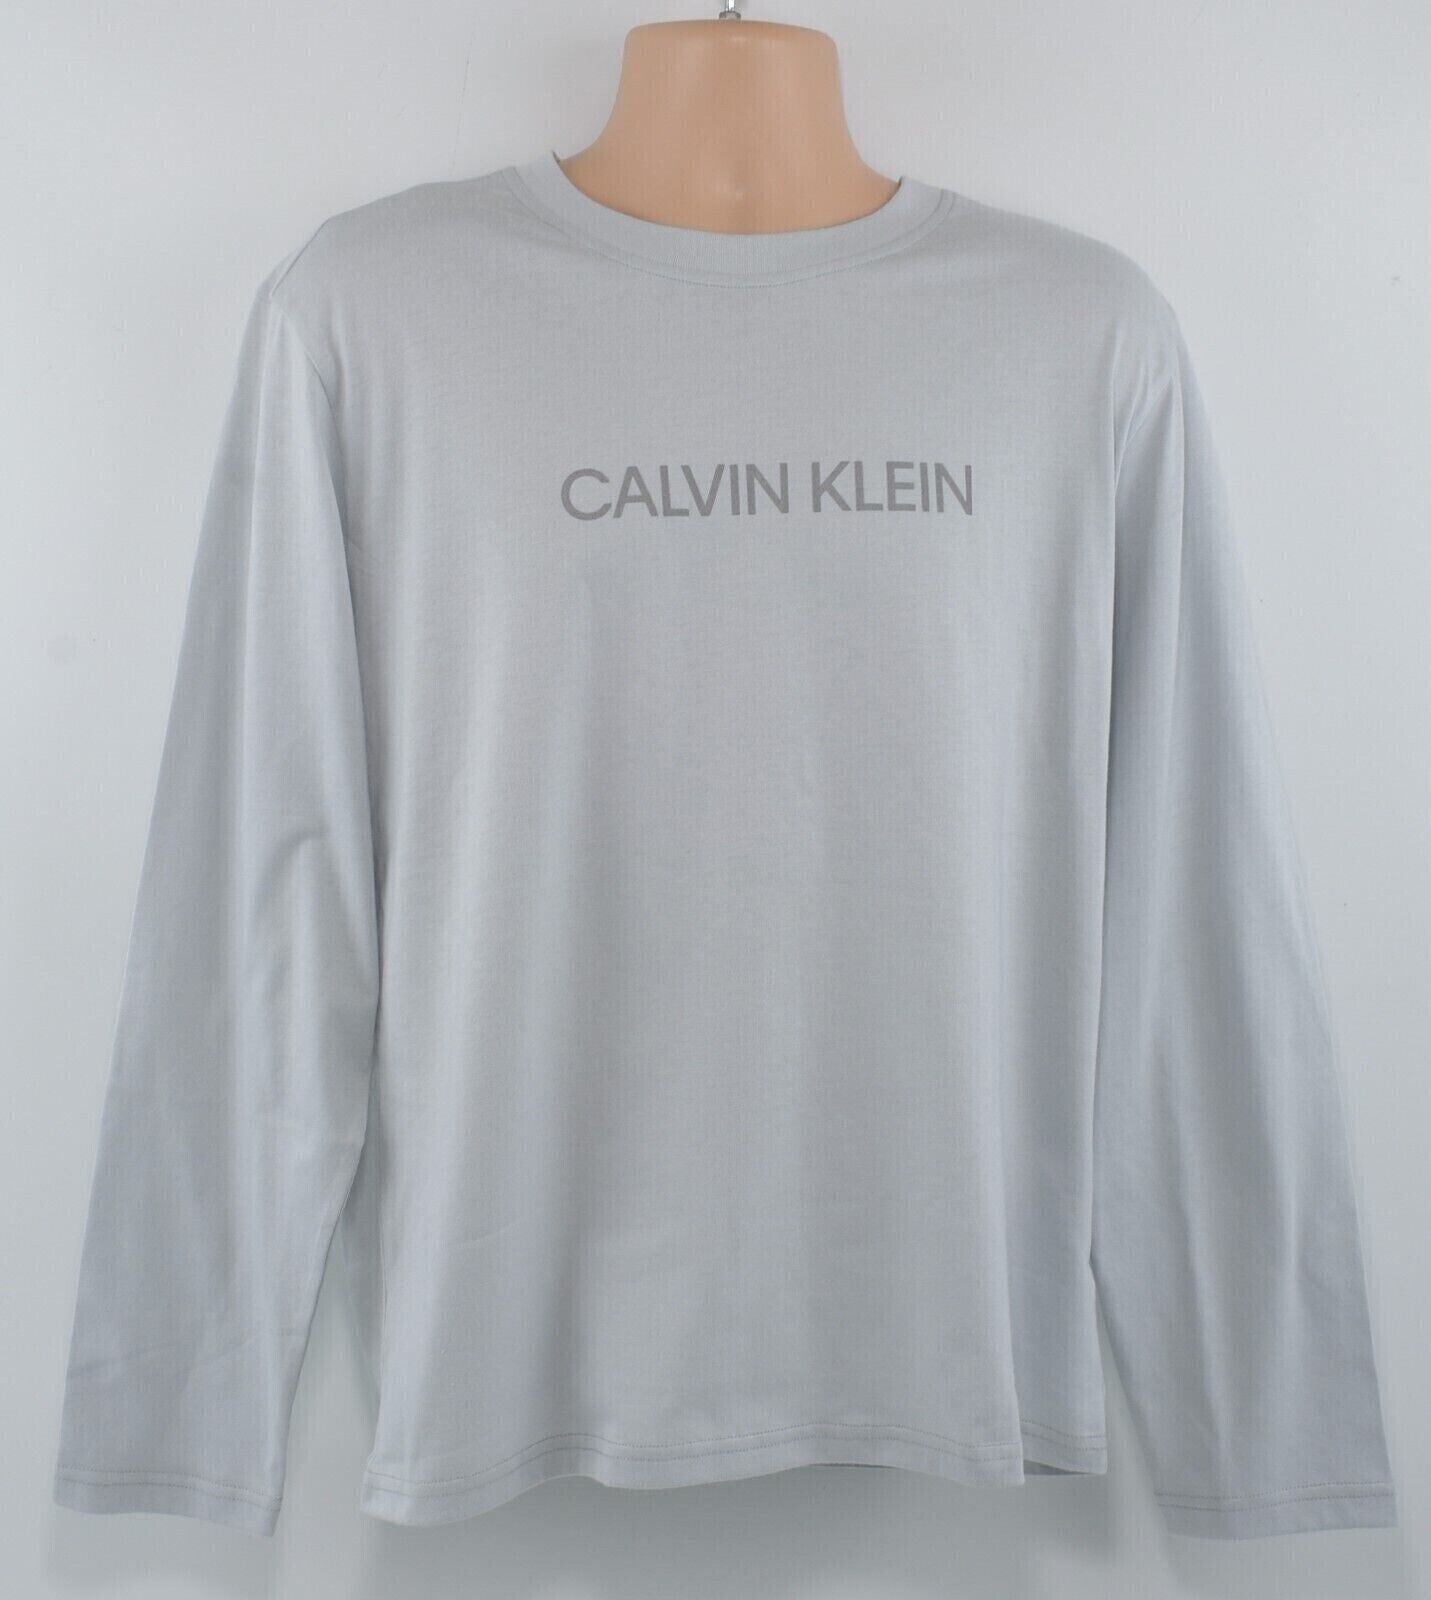 CALVIN KLEIN Performance: Men's Long Sleeve Crew Neck T-shirt Top, Grey, size XL